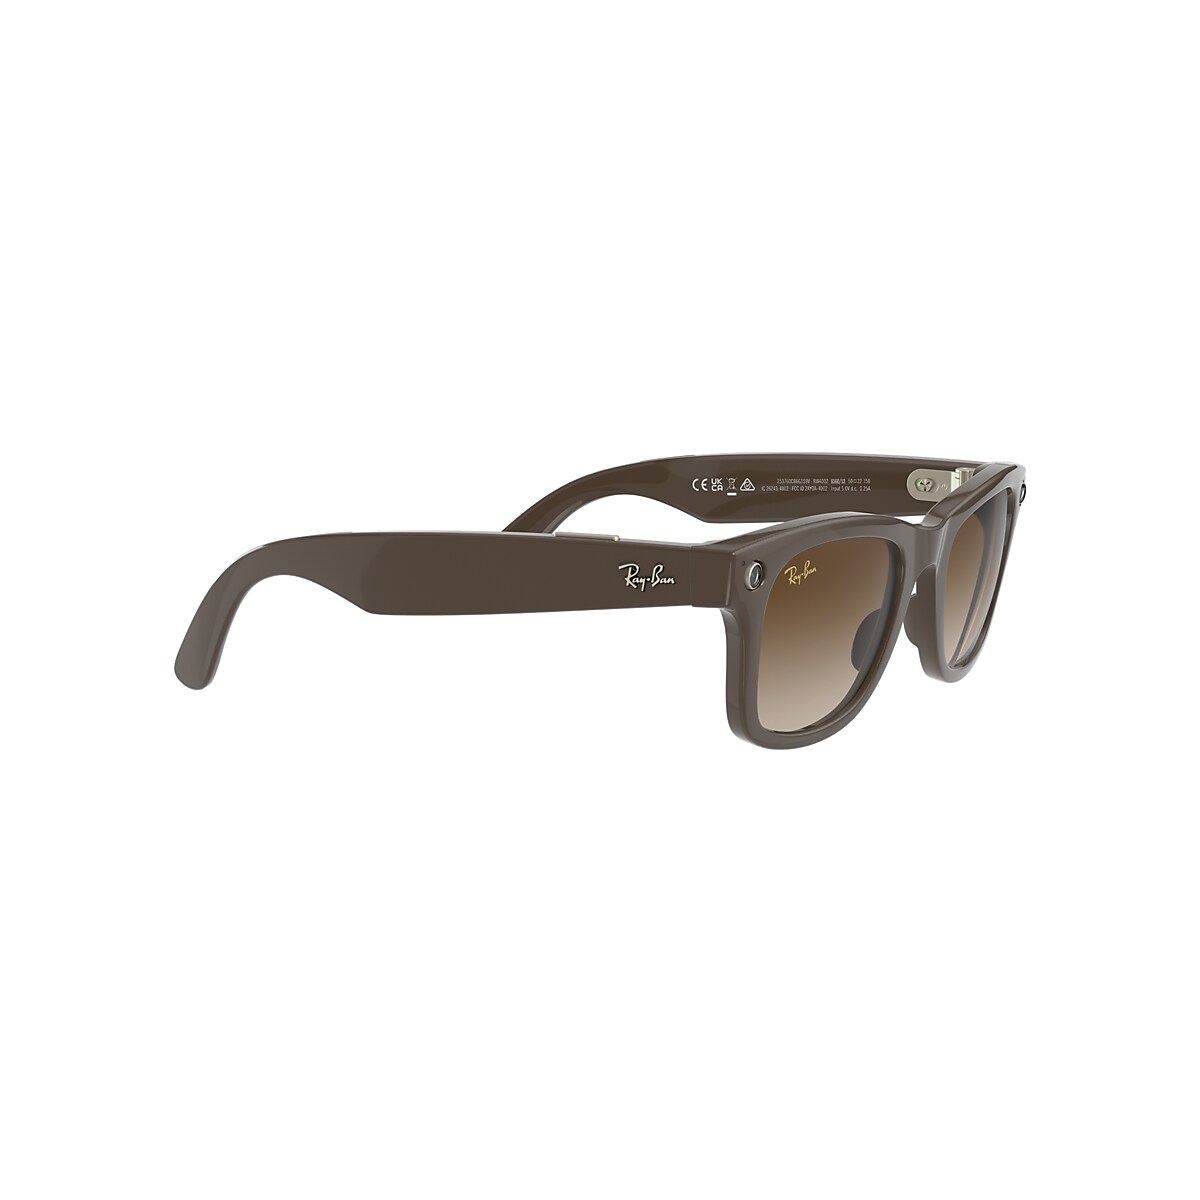 Ray-ban Stories | Wayfarer Sunglasses in Shiny Brown and Brown | Ray-Ban®